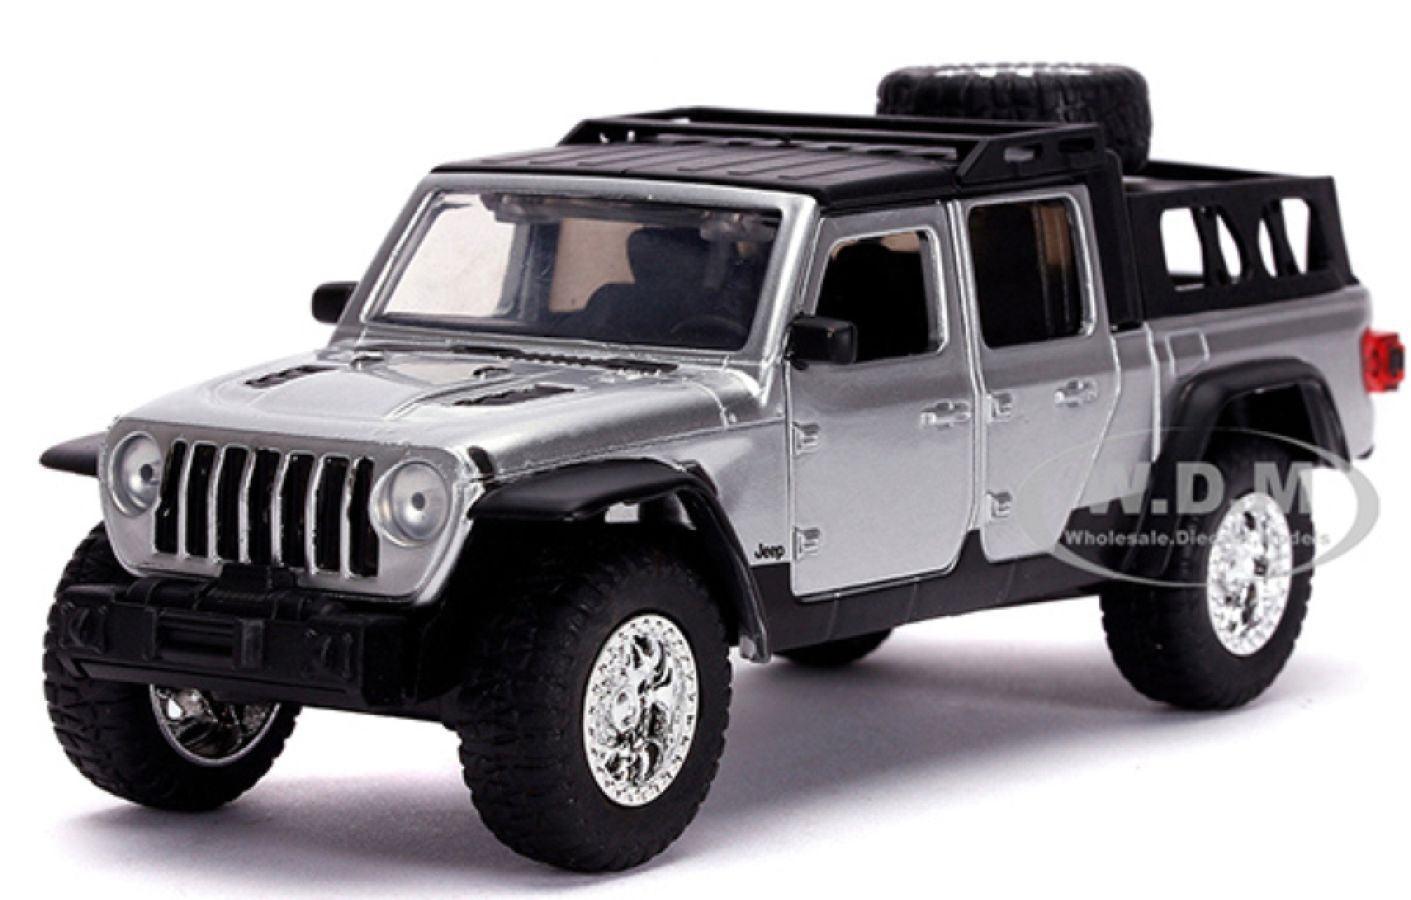 JAD32031 Fast and Furious - 2020 Jeep Gladiator 1:32 Scale - Jada Toys - Titan Pop Culture